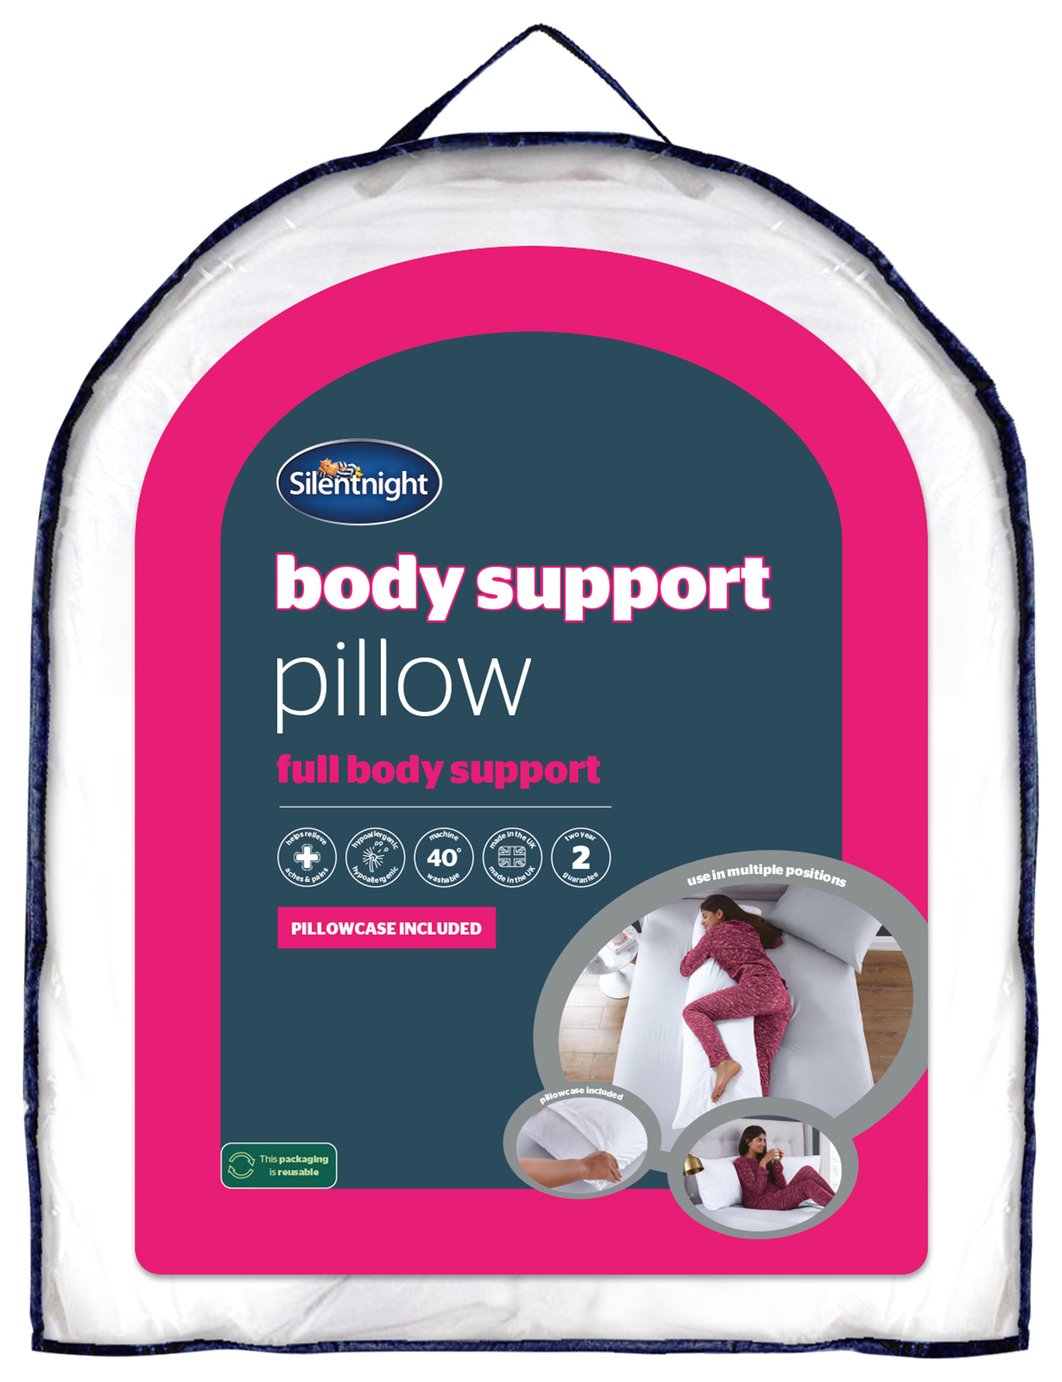 argos pillows neck support